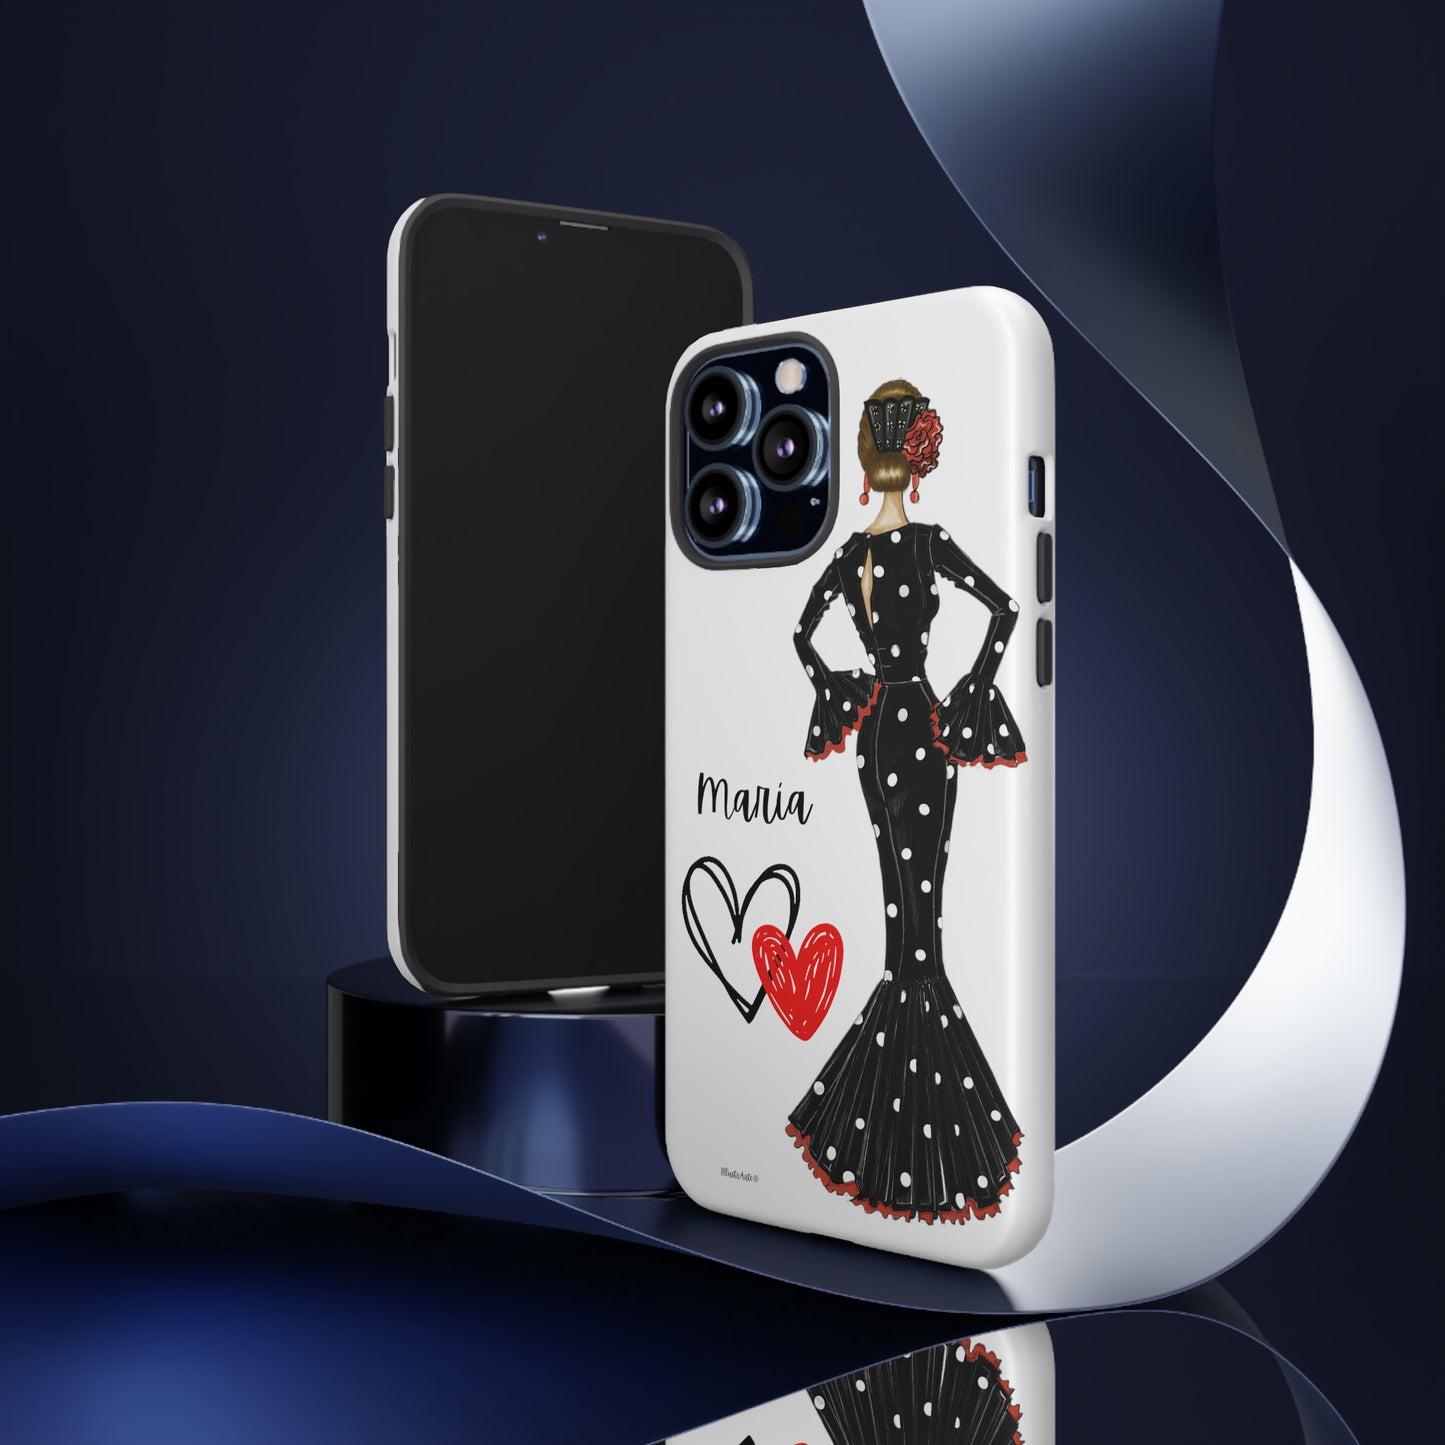 Flamenco Lovers Customizable white Tough Phone Case - Our flamenco dancer Maria in an elegant Black Dotted Dress